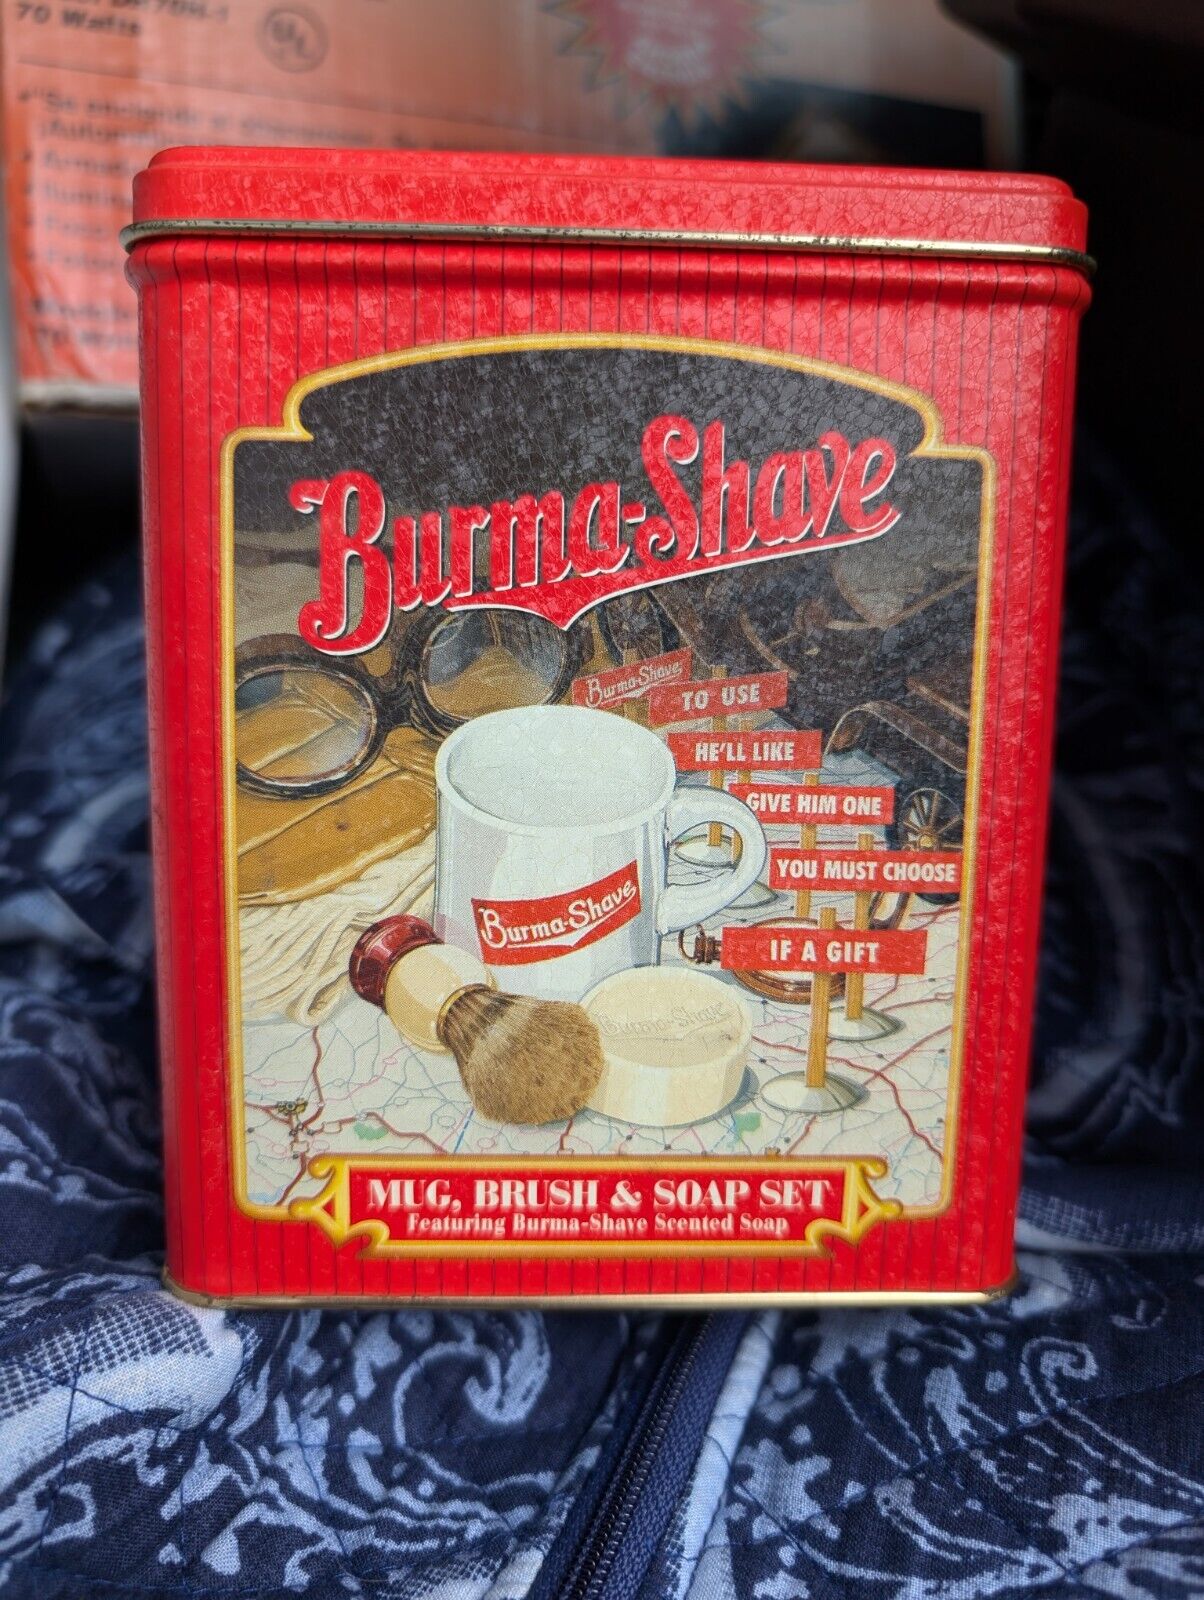 Retro Vintage Burma-Shave; Shaving Mug Brush & Soap Set Kit Tin Canister